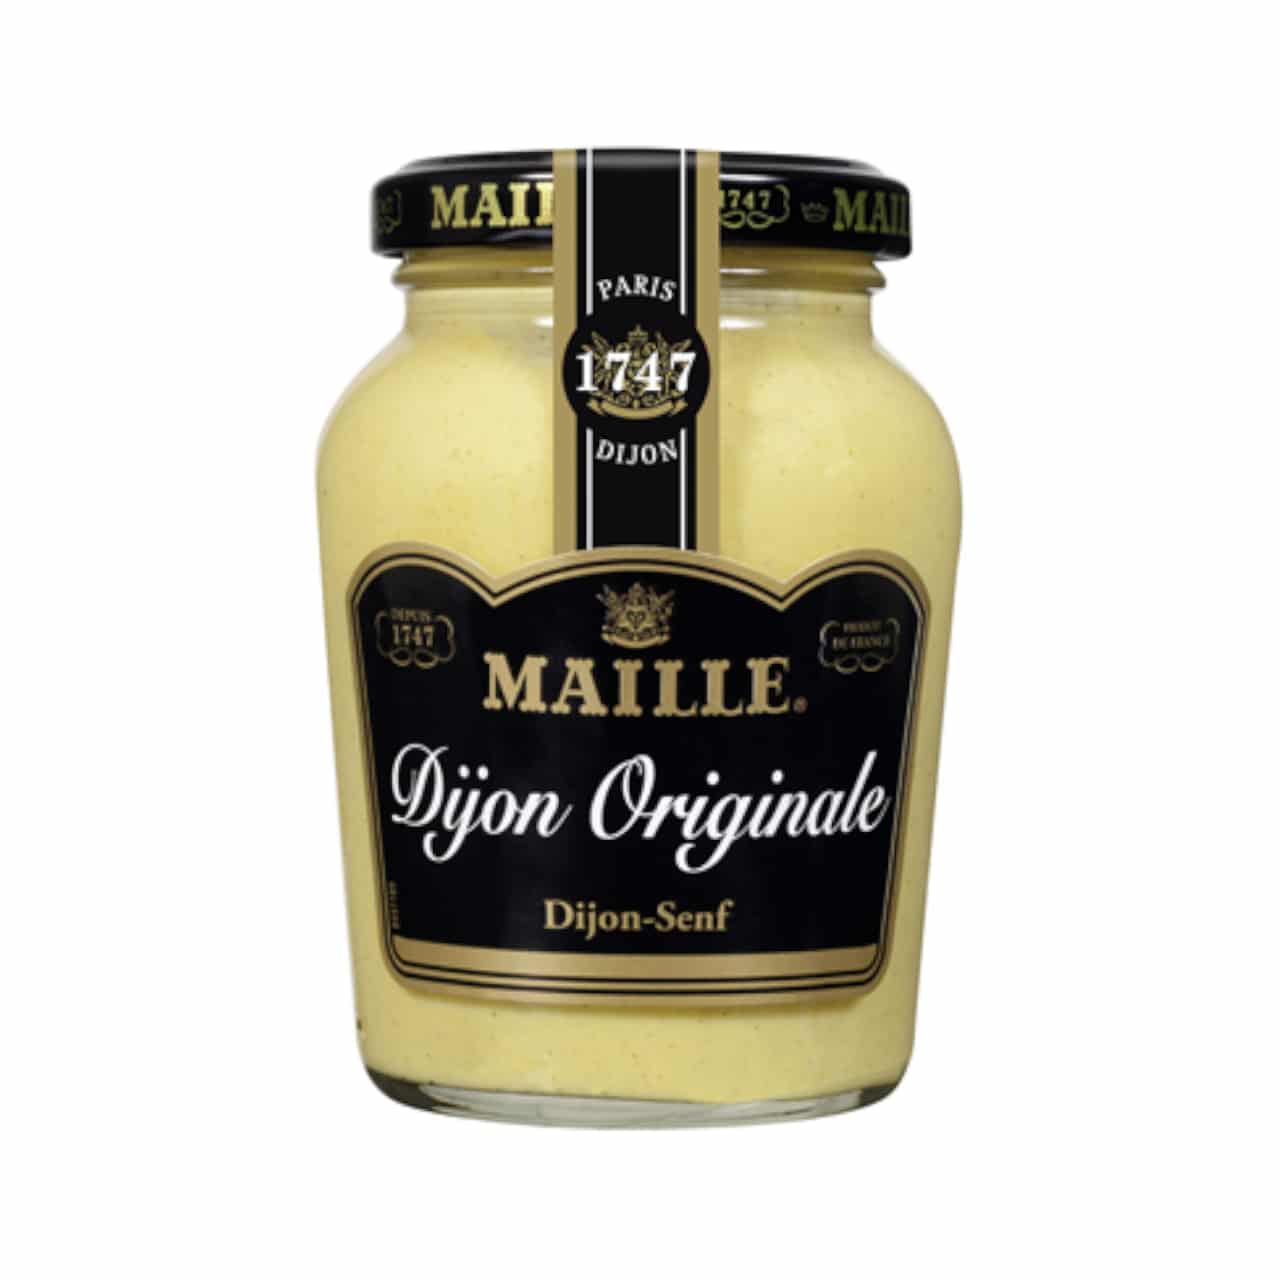 Maille Dijon Originale Dijon-Senf